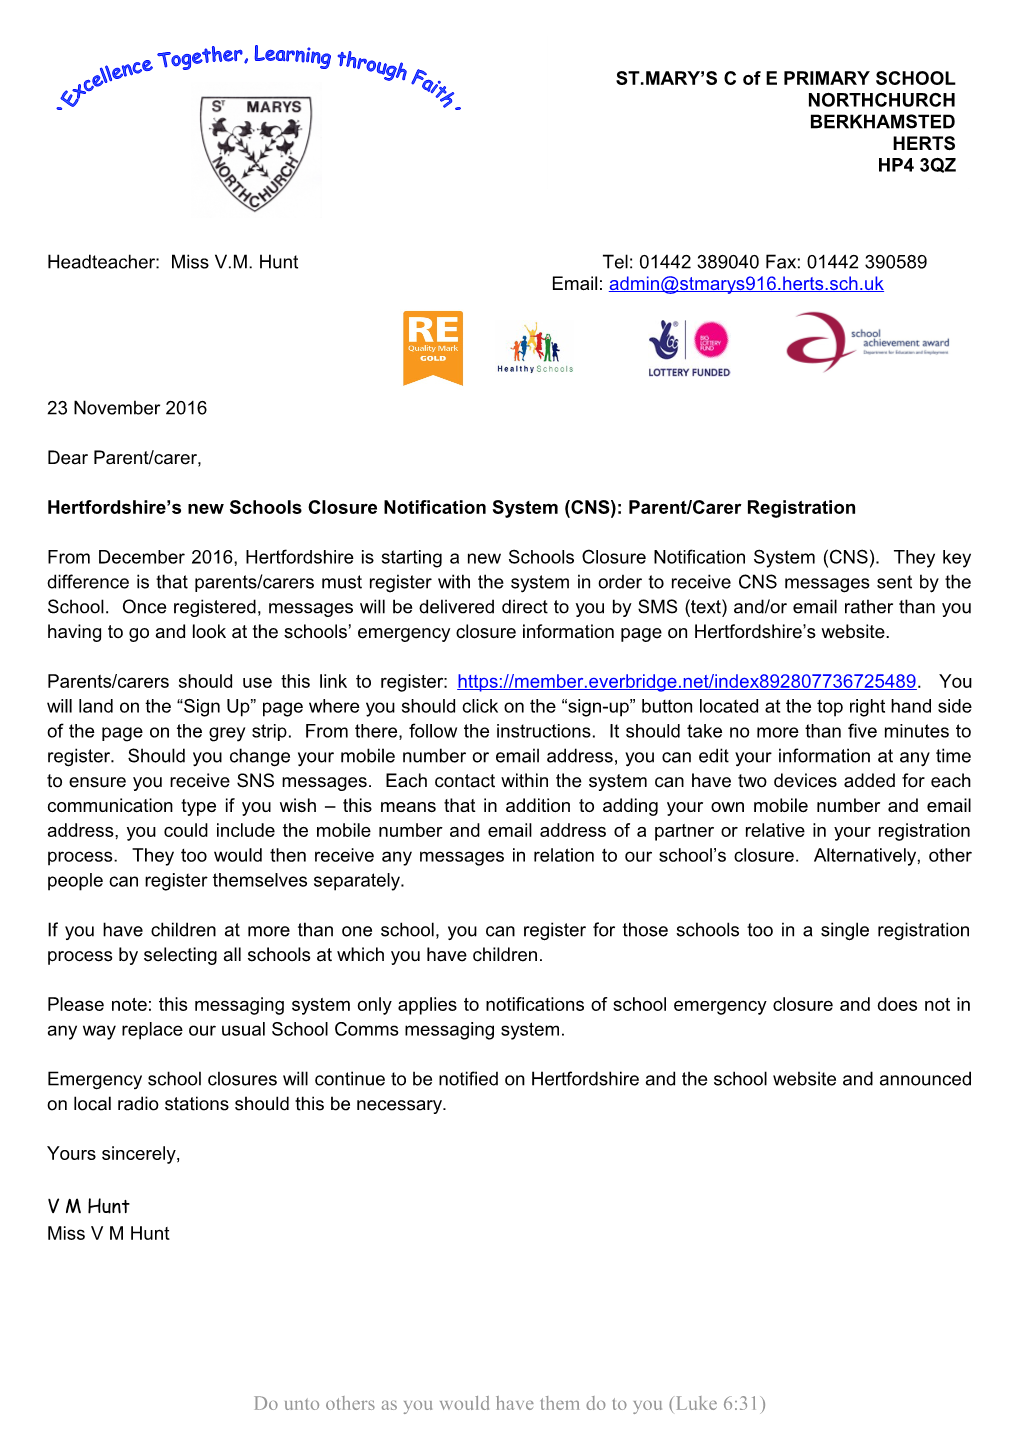 Hertfordshire S New Schools Closure Notification System (CNS): Parent/Carer Registration